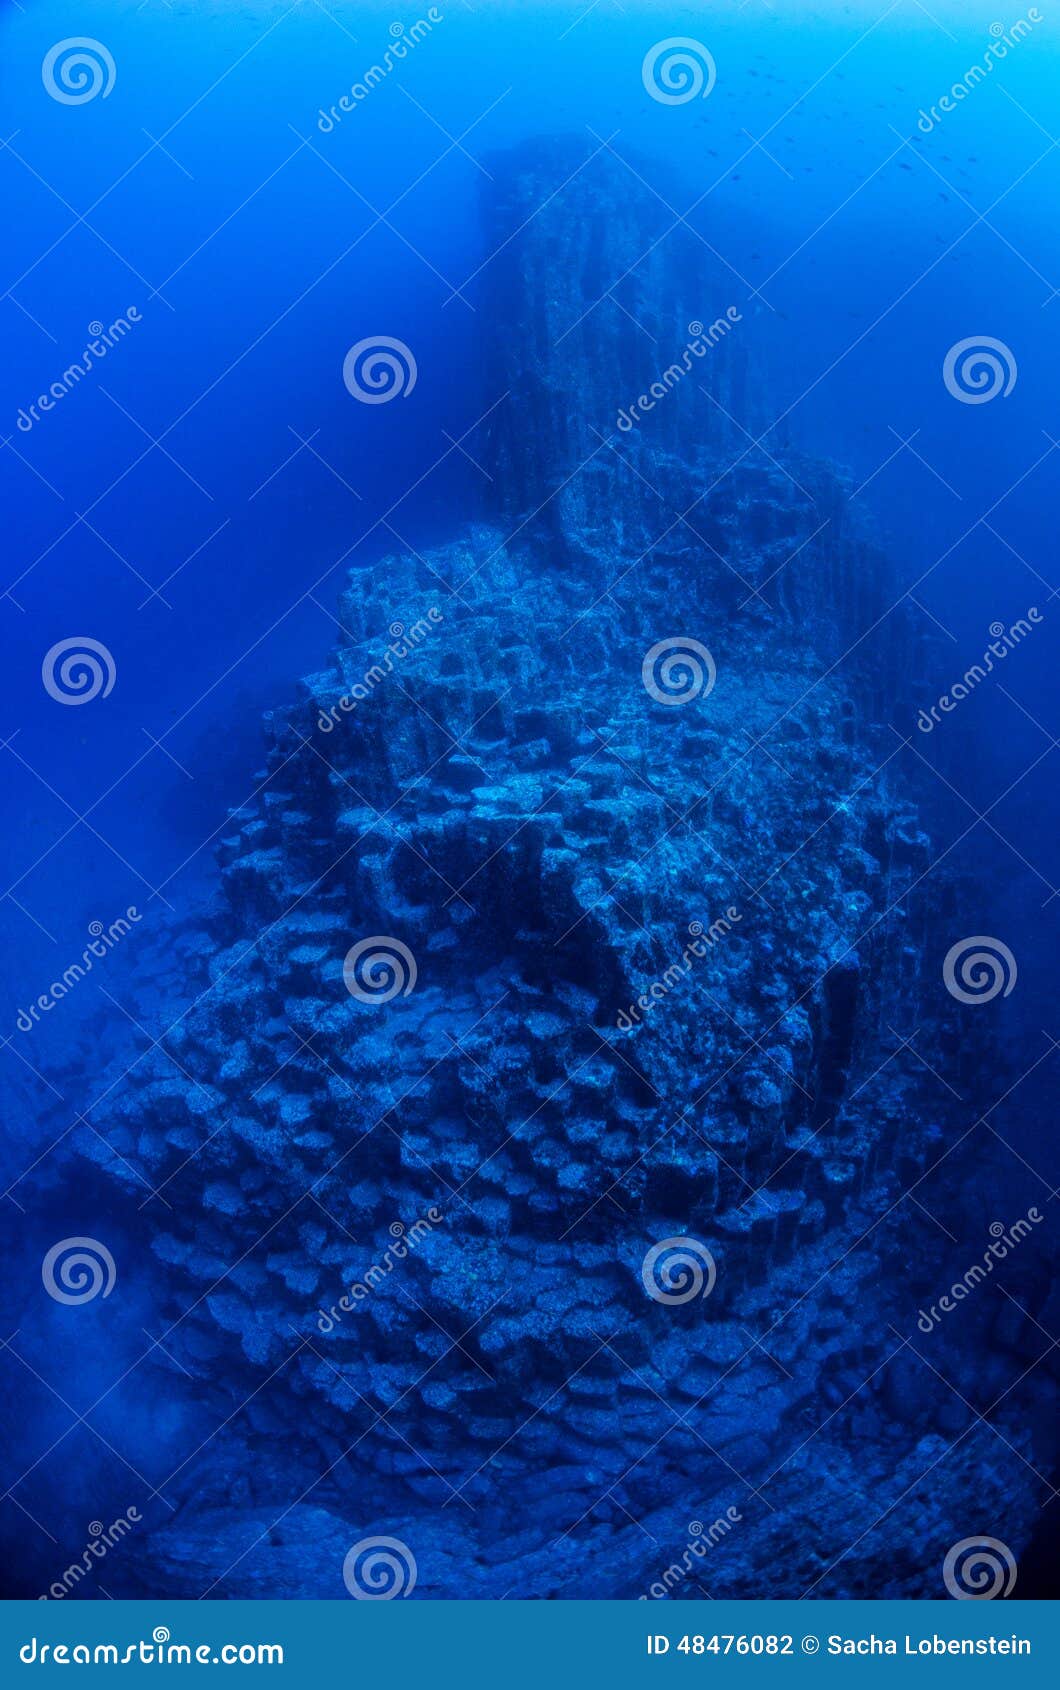 underwater volcanic scape